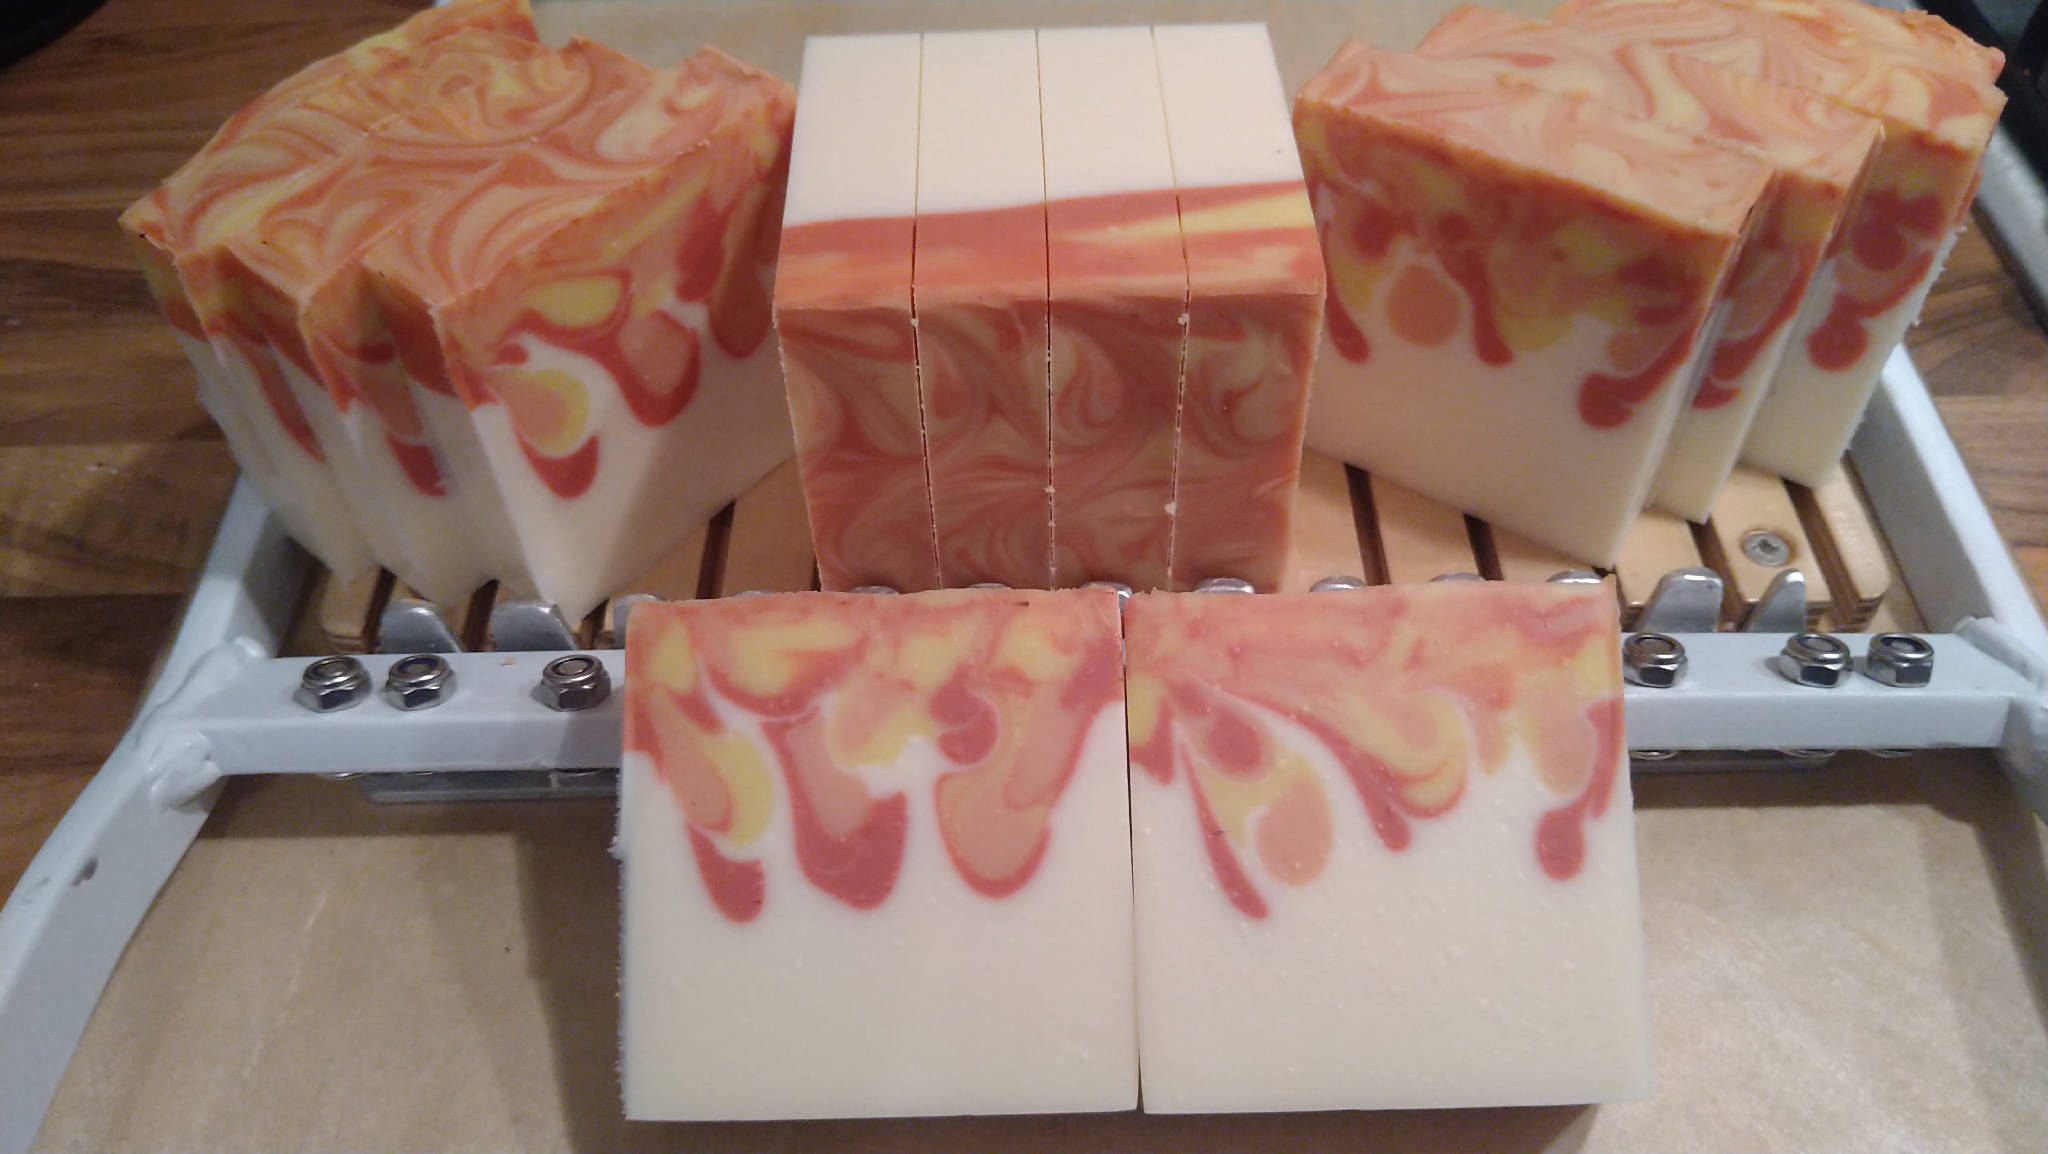 The Citrus Grove soap